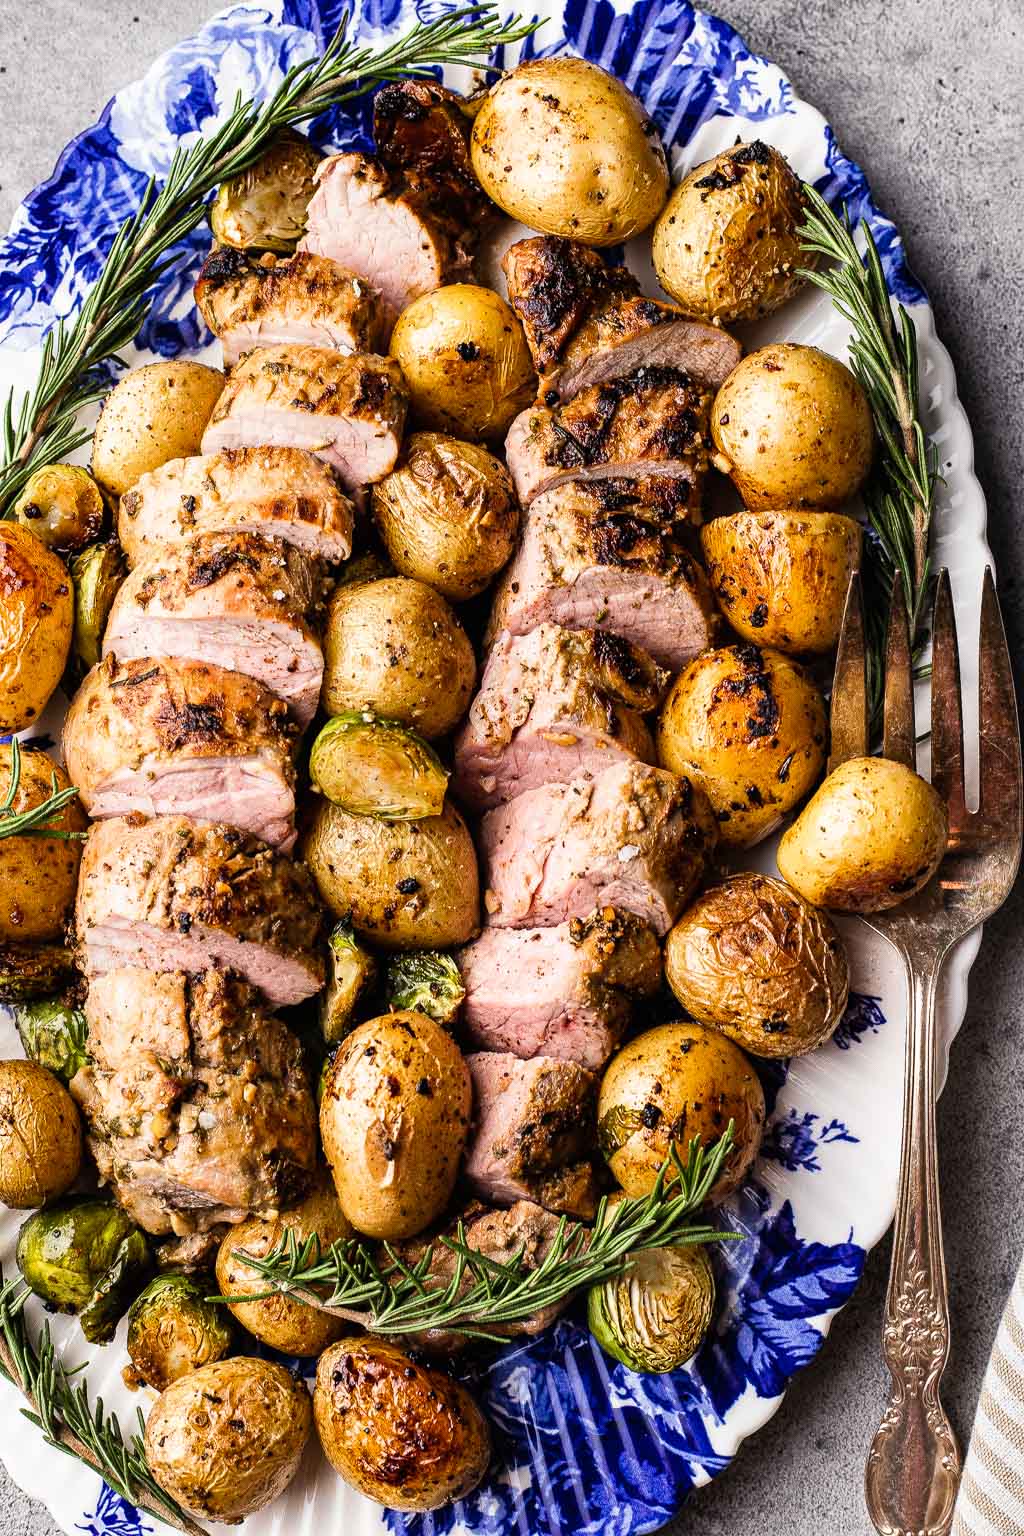 Roast pork tenderloin and potatoes